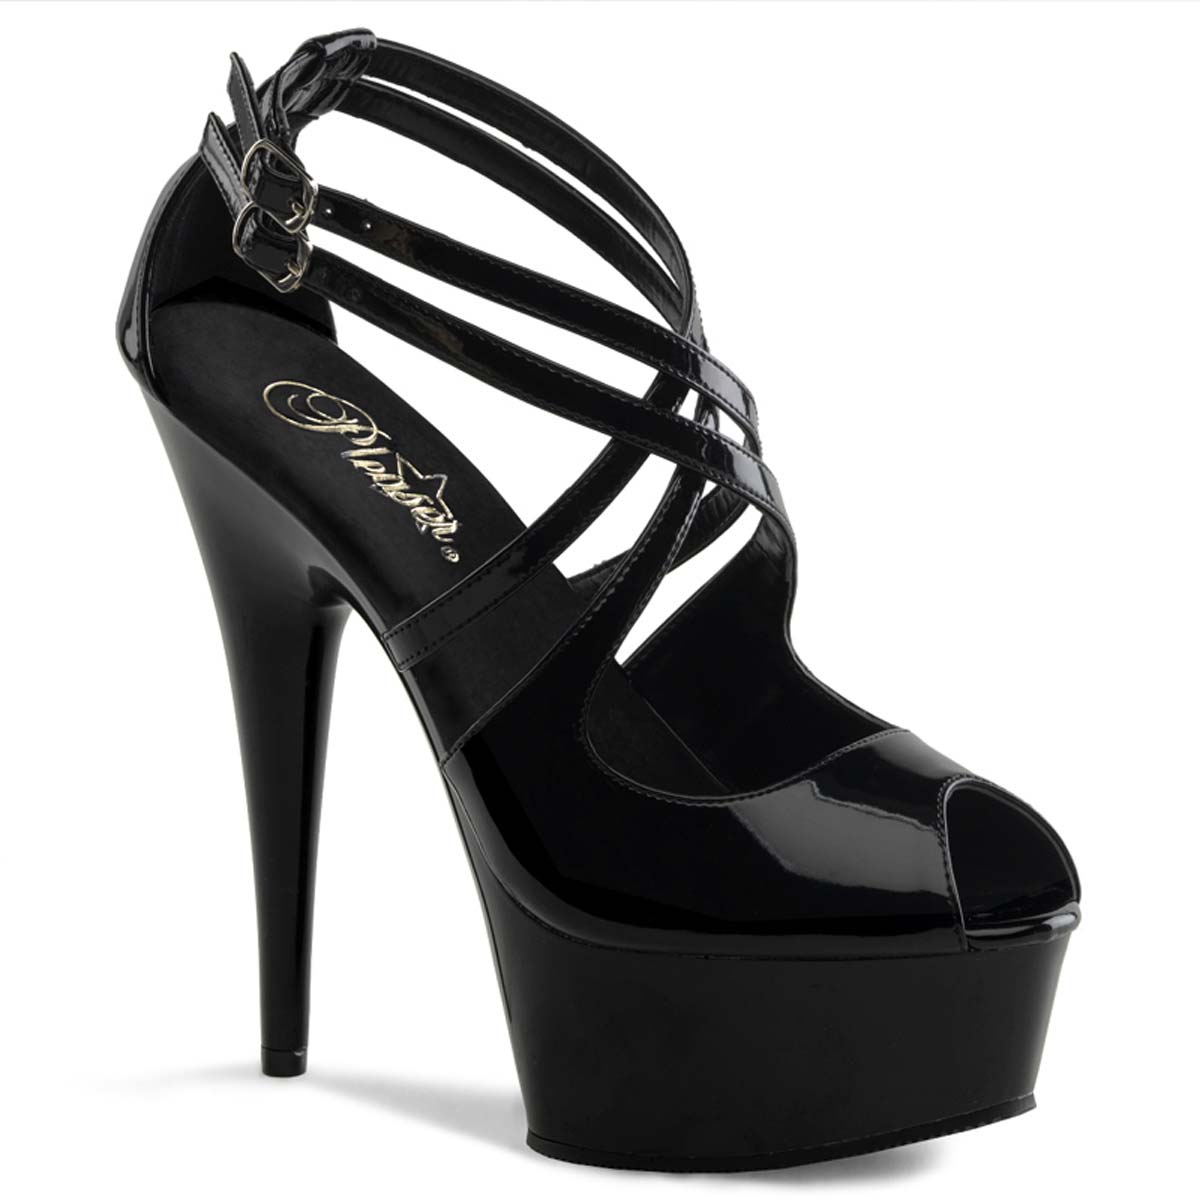 Pleaser Delight-612 - Black/Black in Sexy Heels & Platforms - $59.95